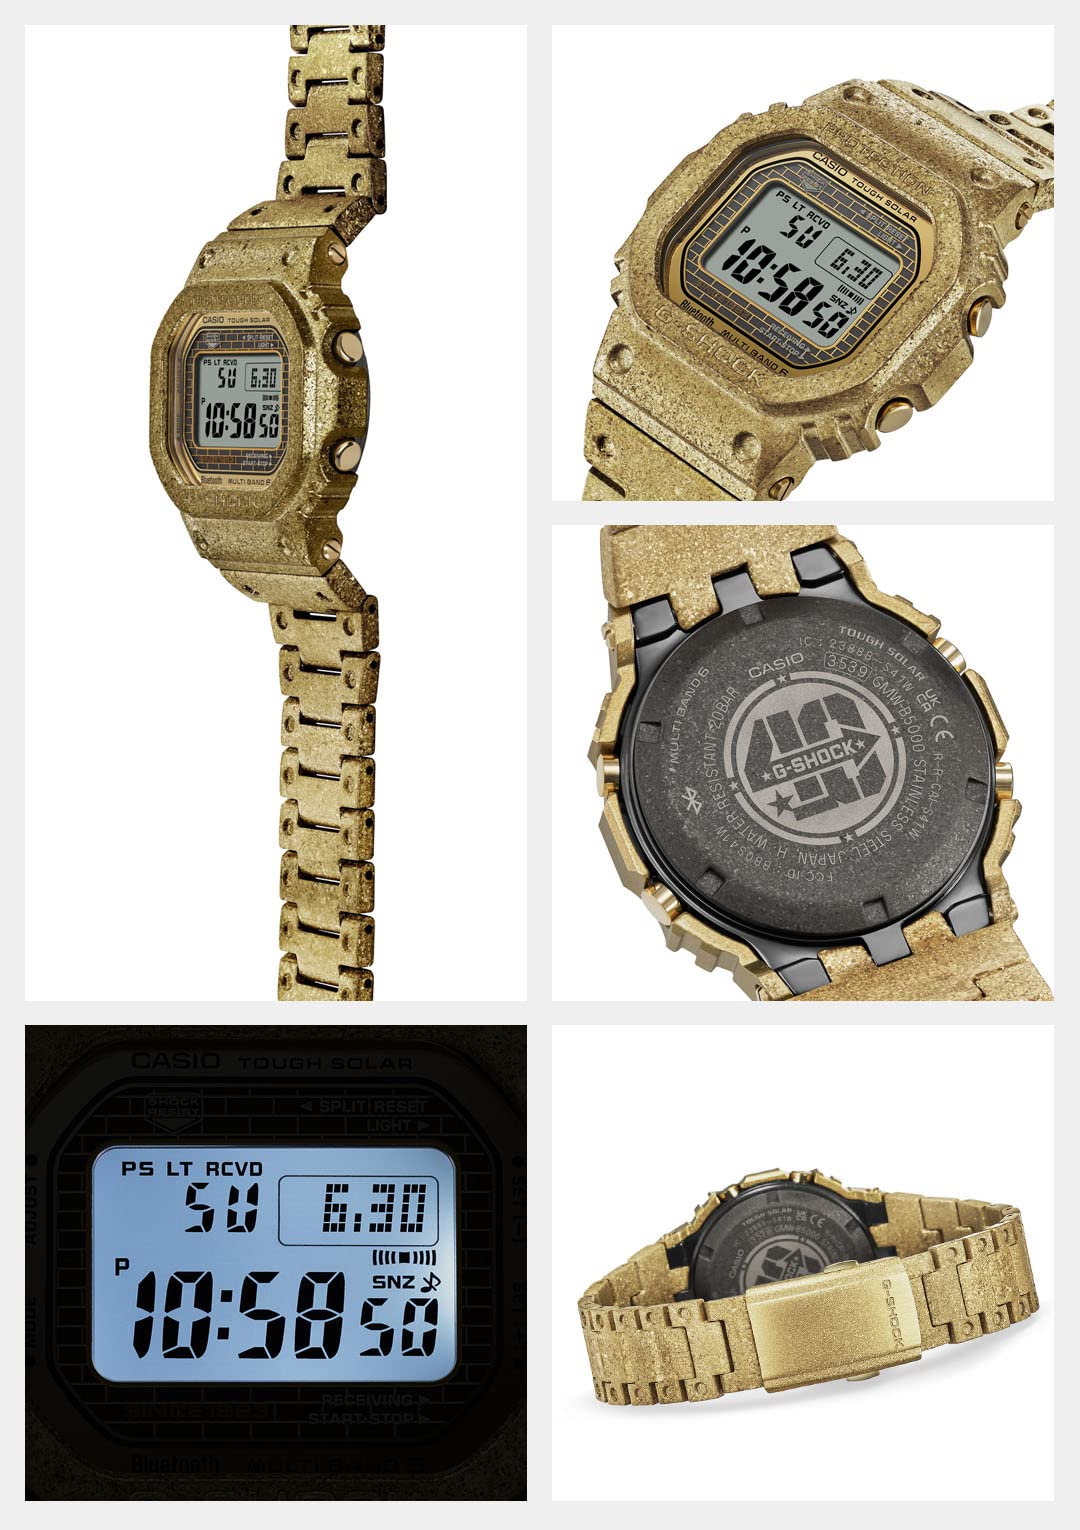 [Casio] G-SHOCK Bluetooth Watch Full Metal Radio Solar G-SHOCK 40th Anniversary RECRYSTALLIZED SERIES GMW-B5000PG-9JR Men's Gold - BanzaiHobby